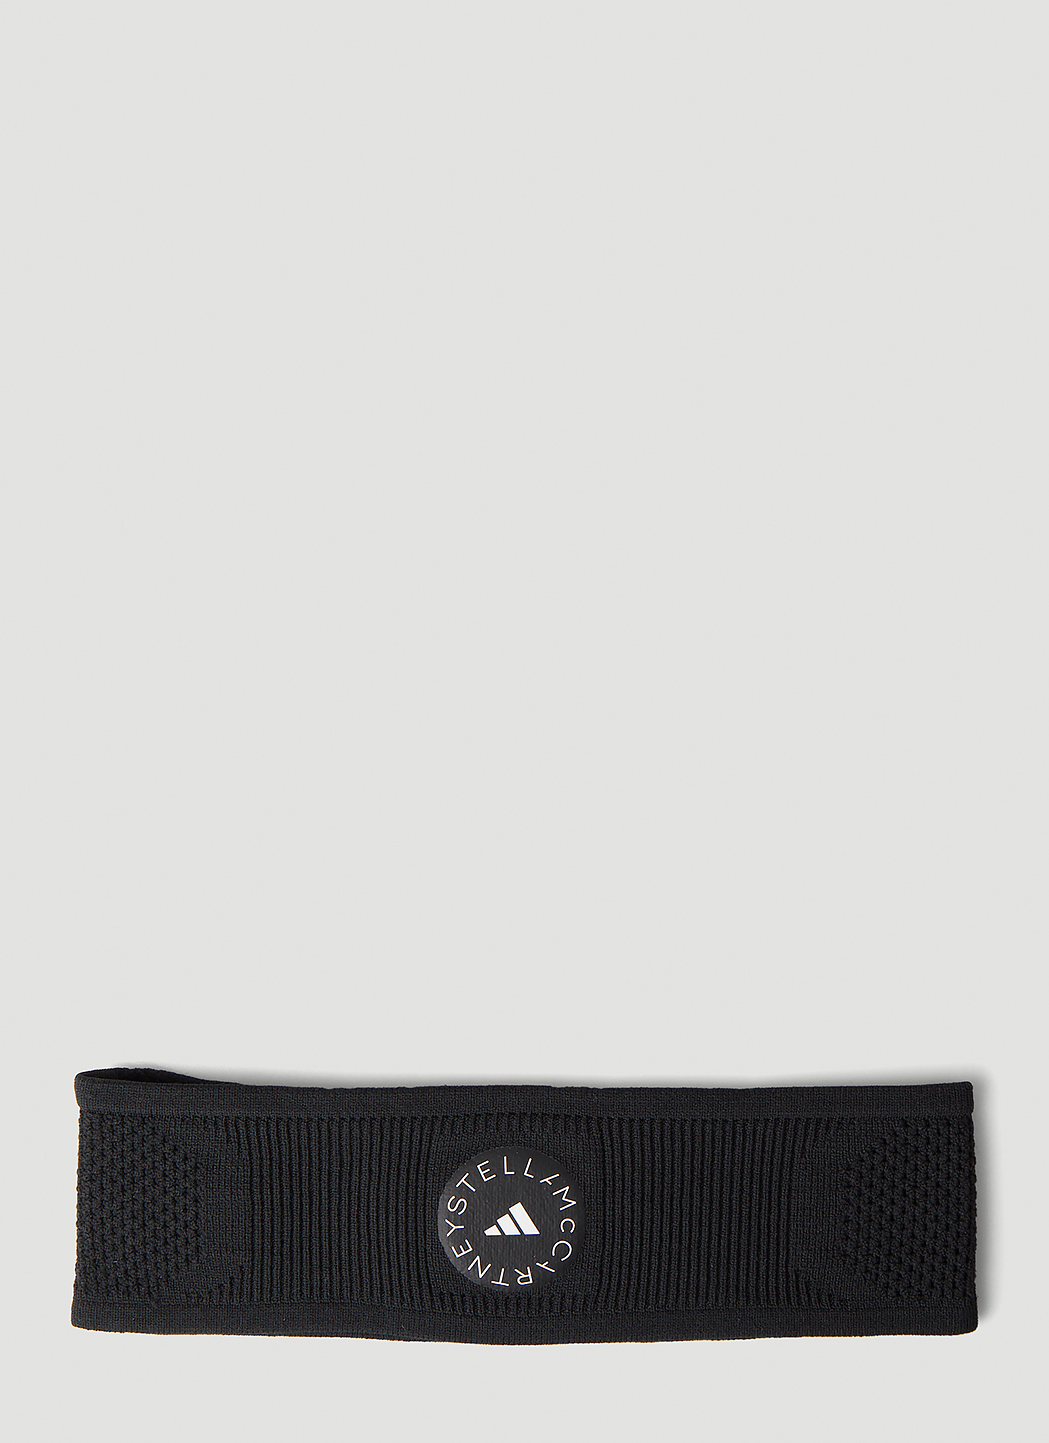 Gorra negra de mujer Stella McCartney Asmc ip0394-blackwhite